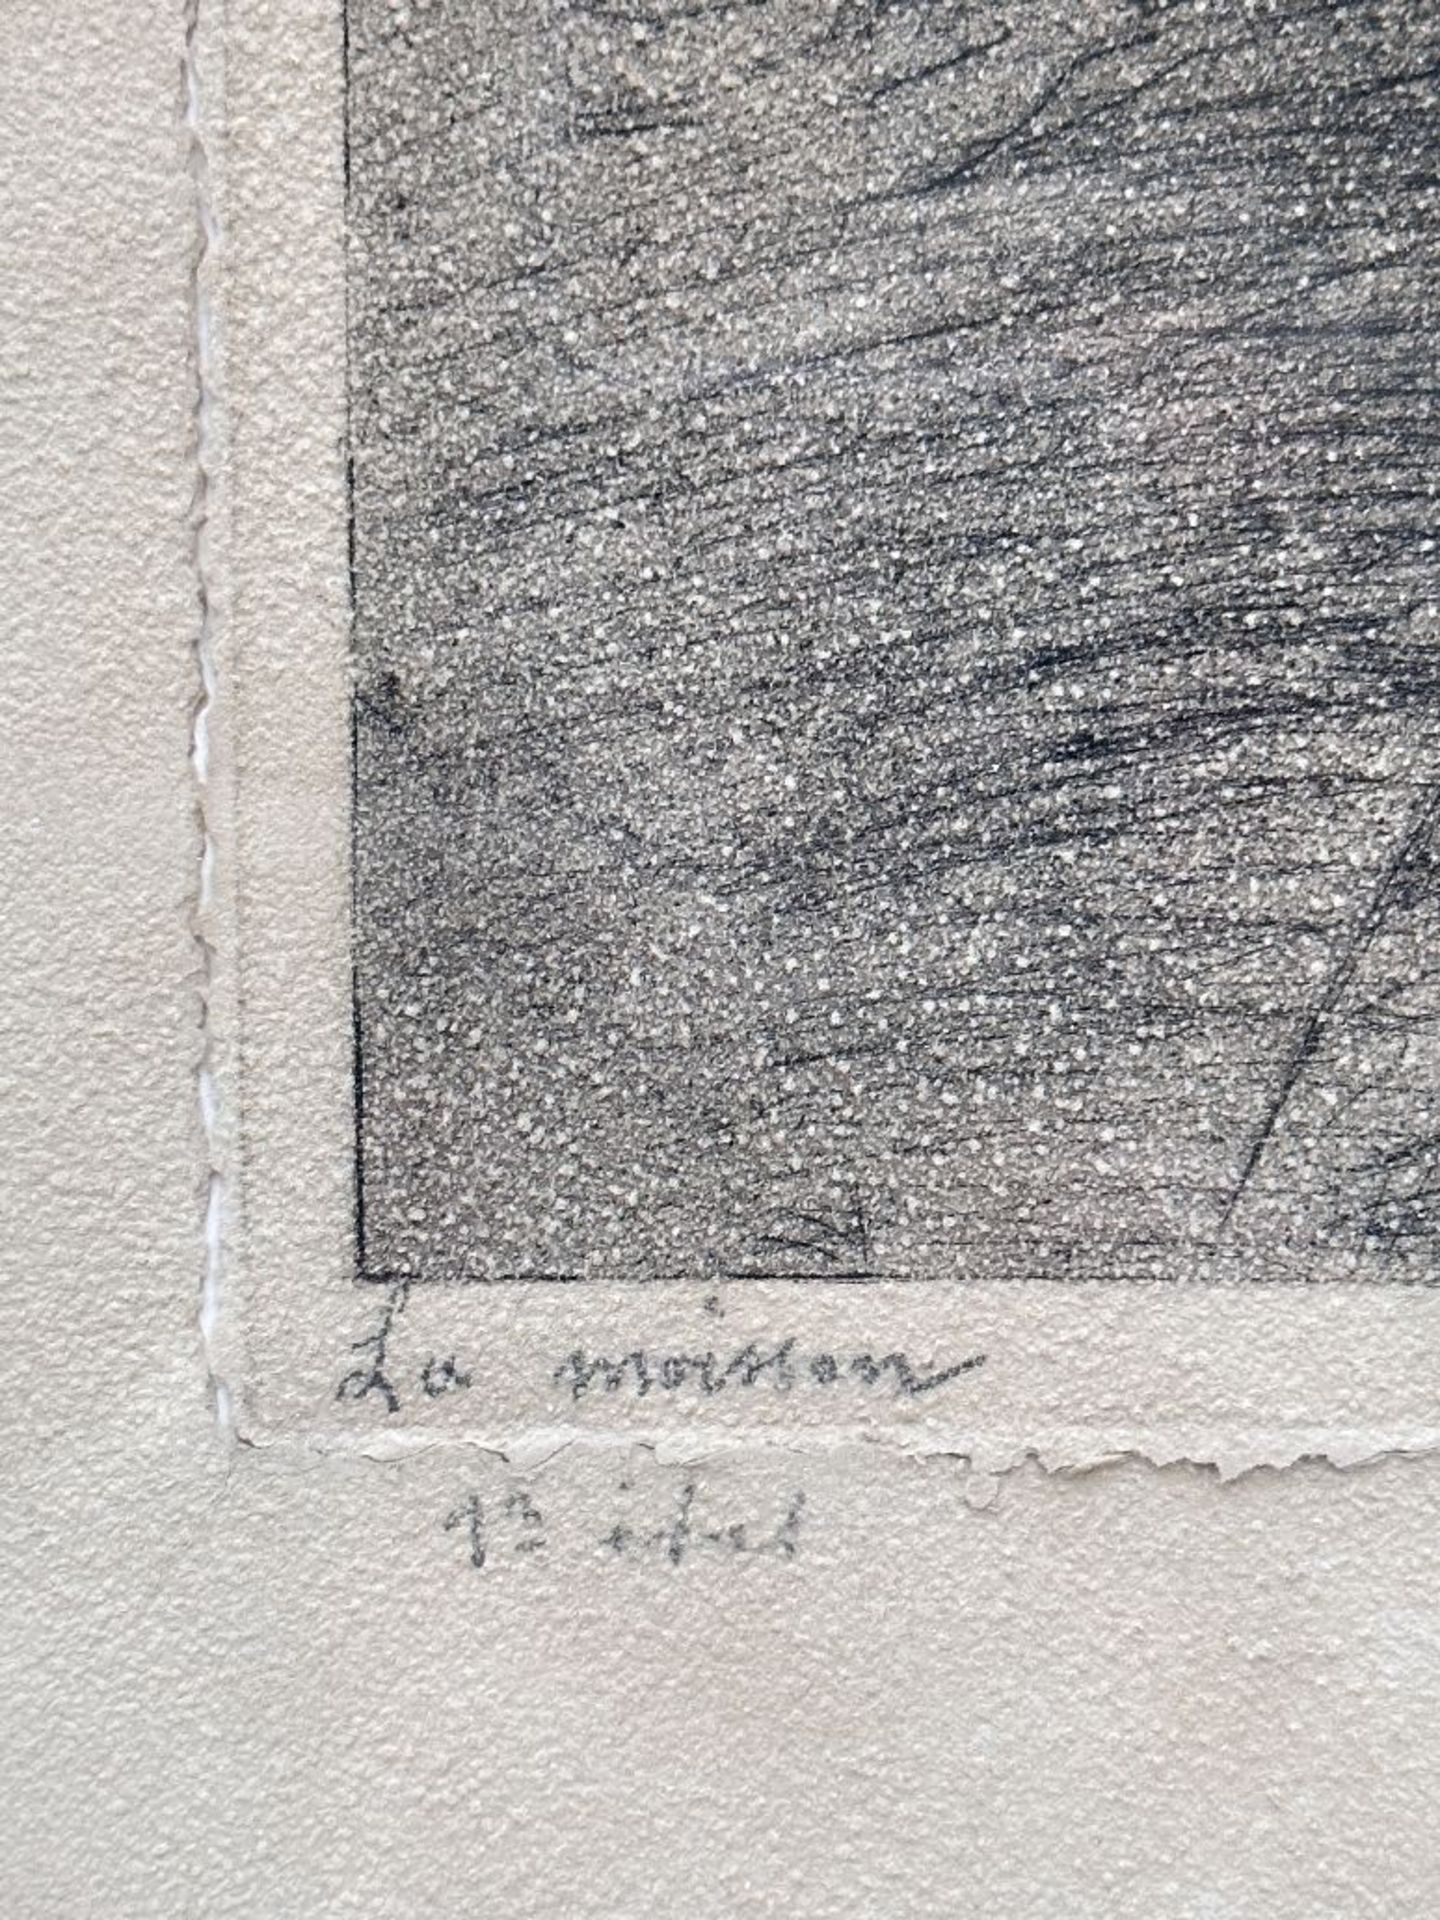 Jules De Bruycker: etching 'la moisson' (*) - Image 4 of 5